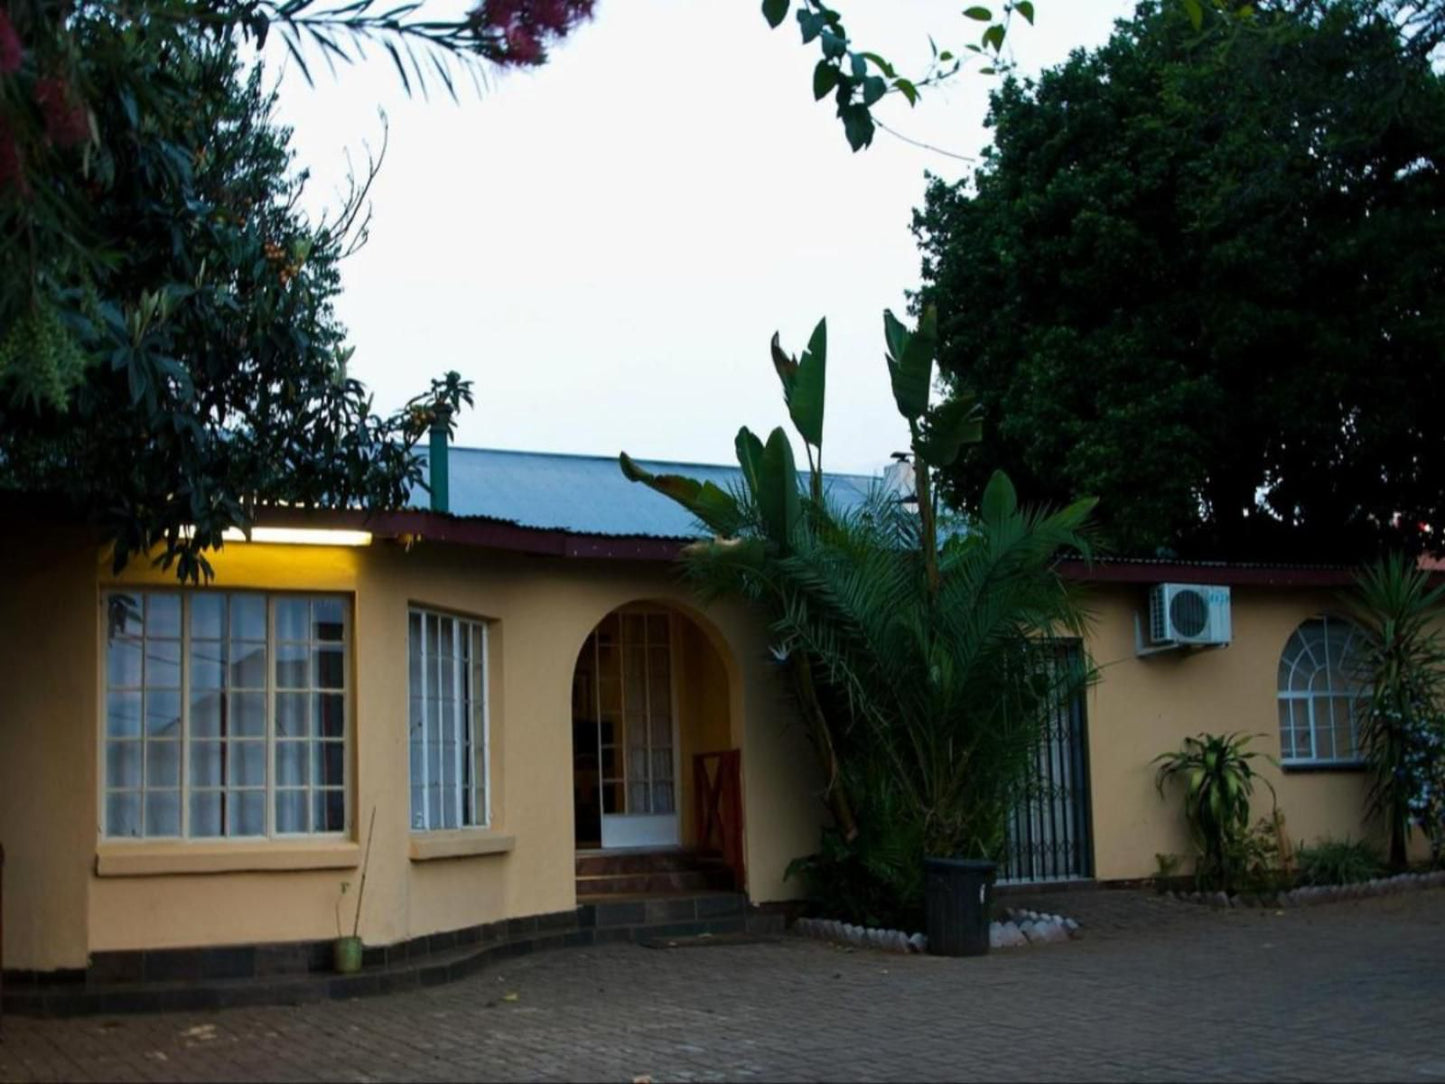 Bushmans Rest Sabie Mpumalanga South Africa House, Building, Architecture, Palm Tree, Plant, Nature, Wood